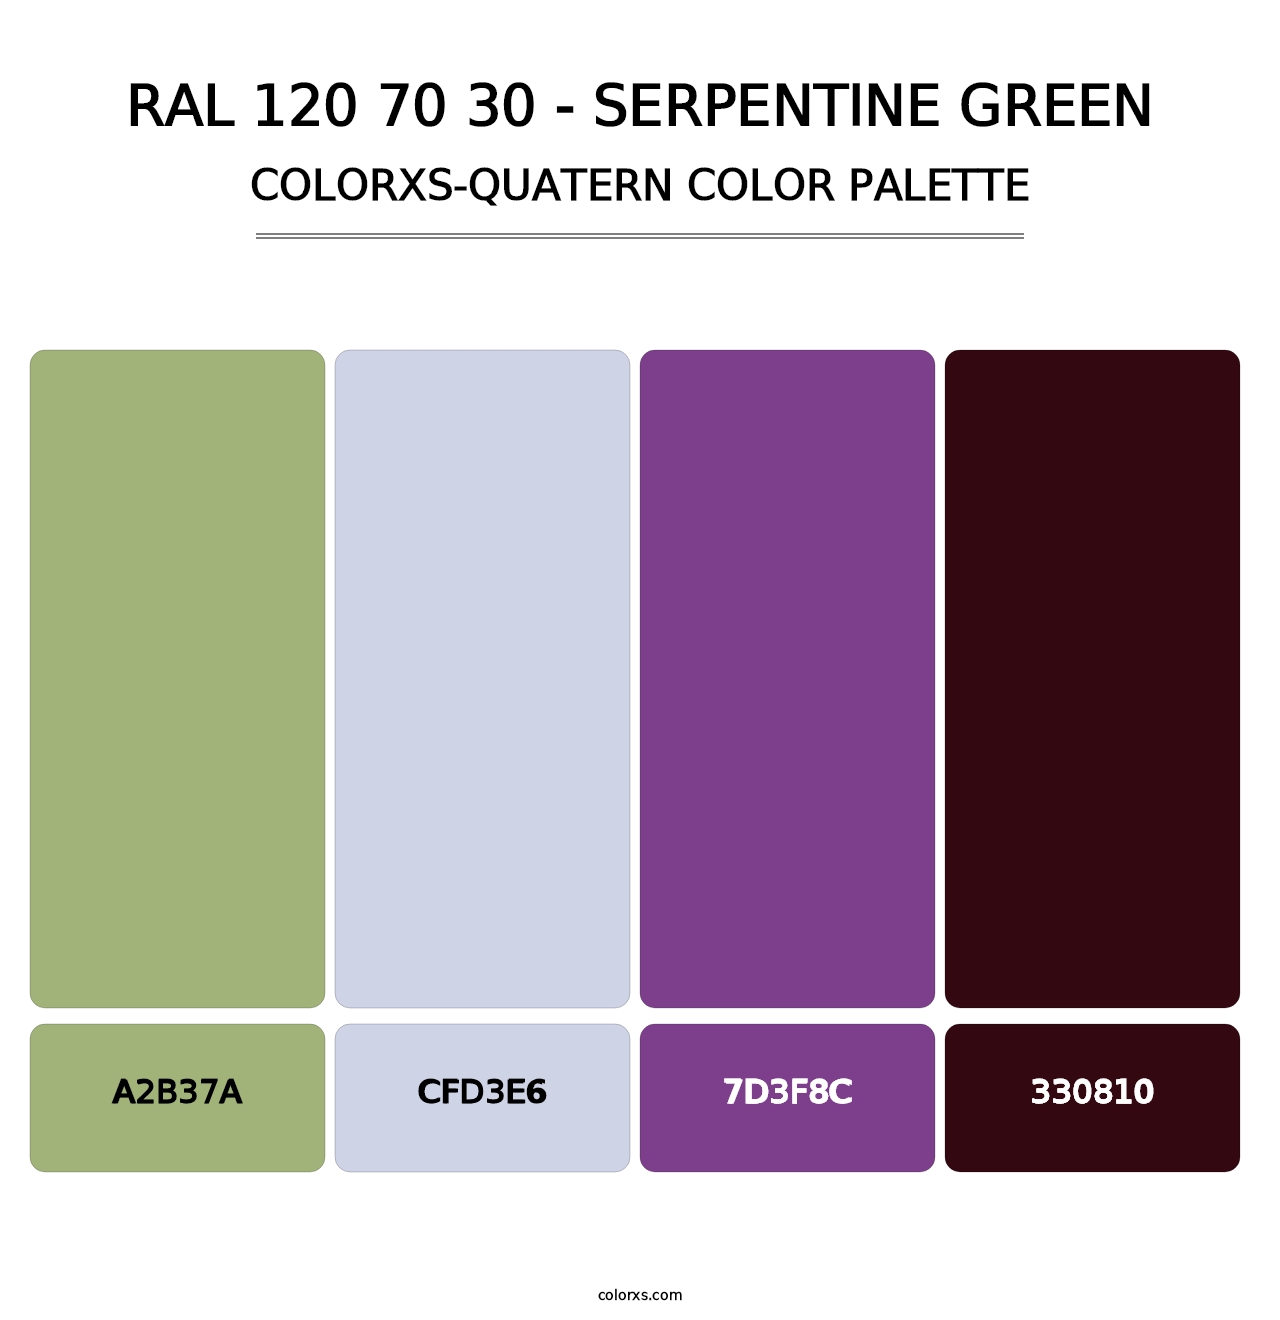 RAL 120 70 30 - Serpentine Green - Colorxs Quatern Palette